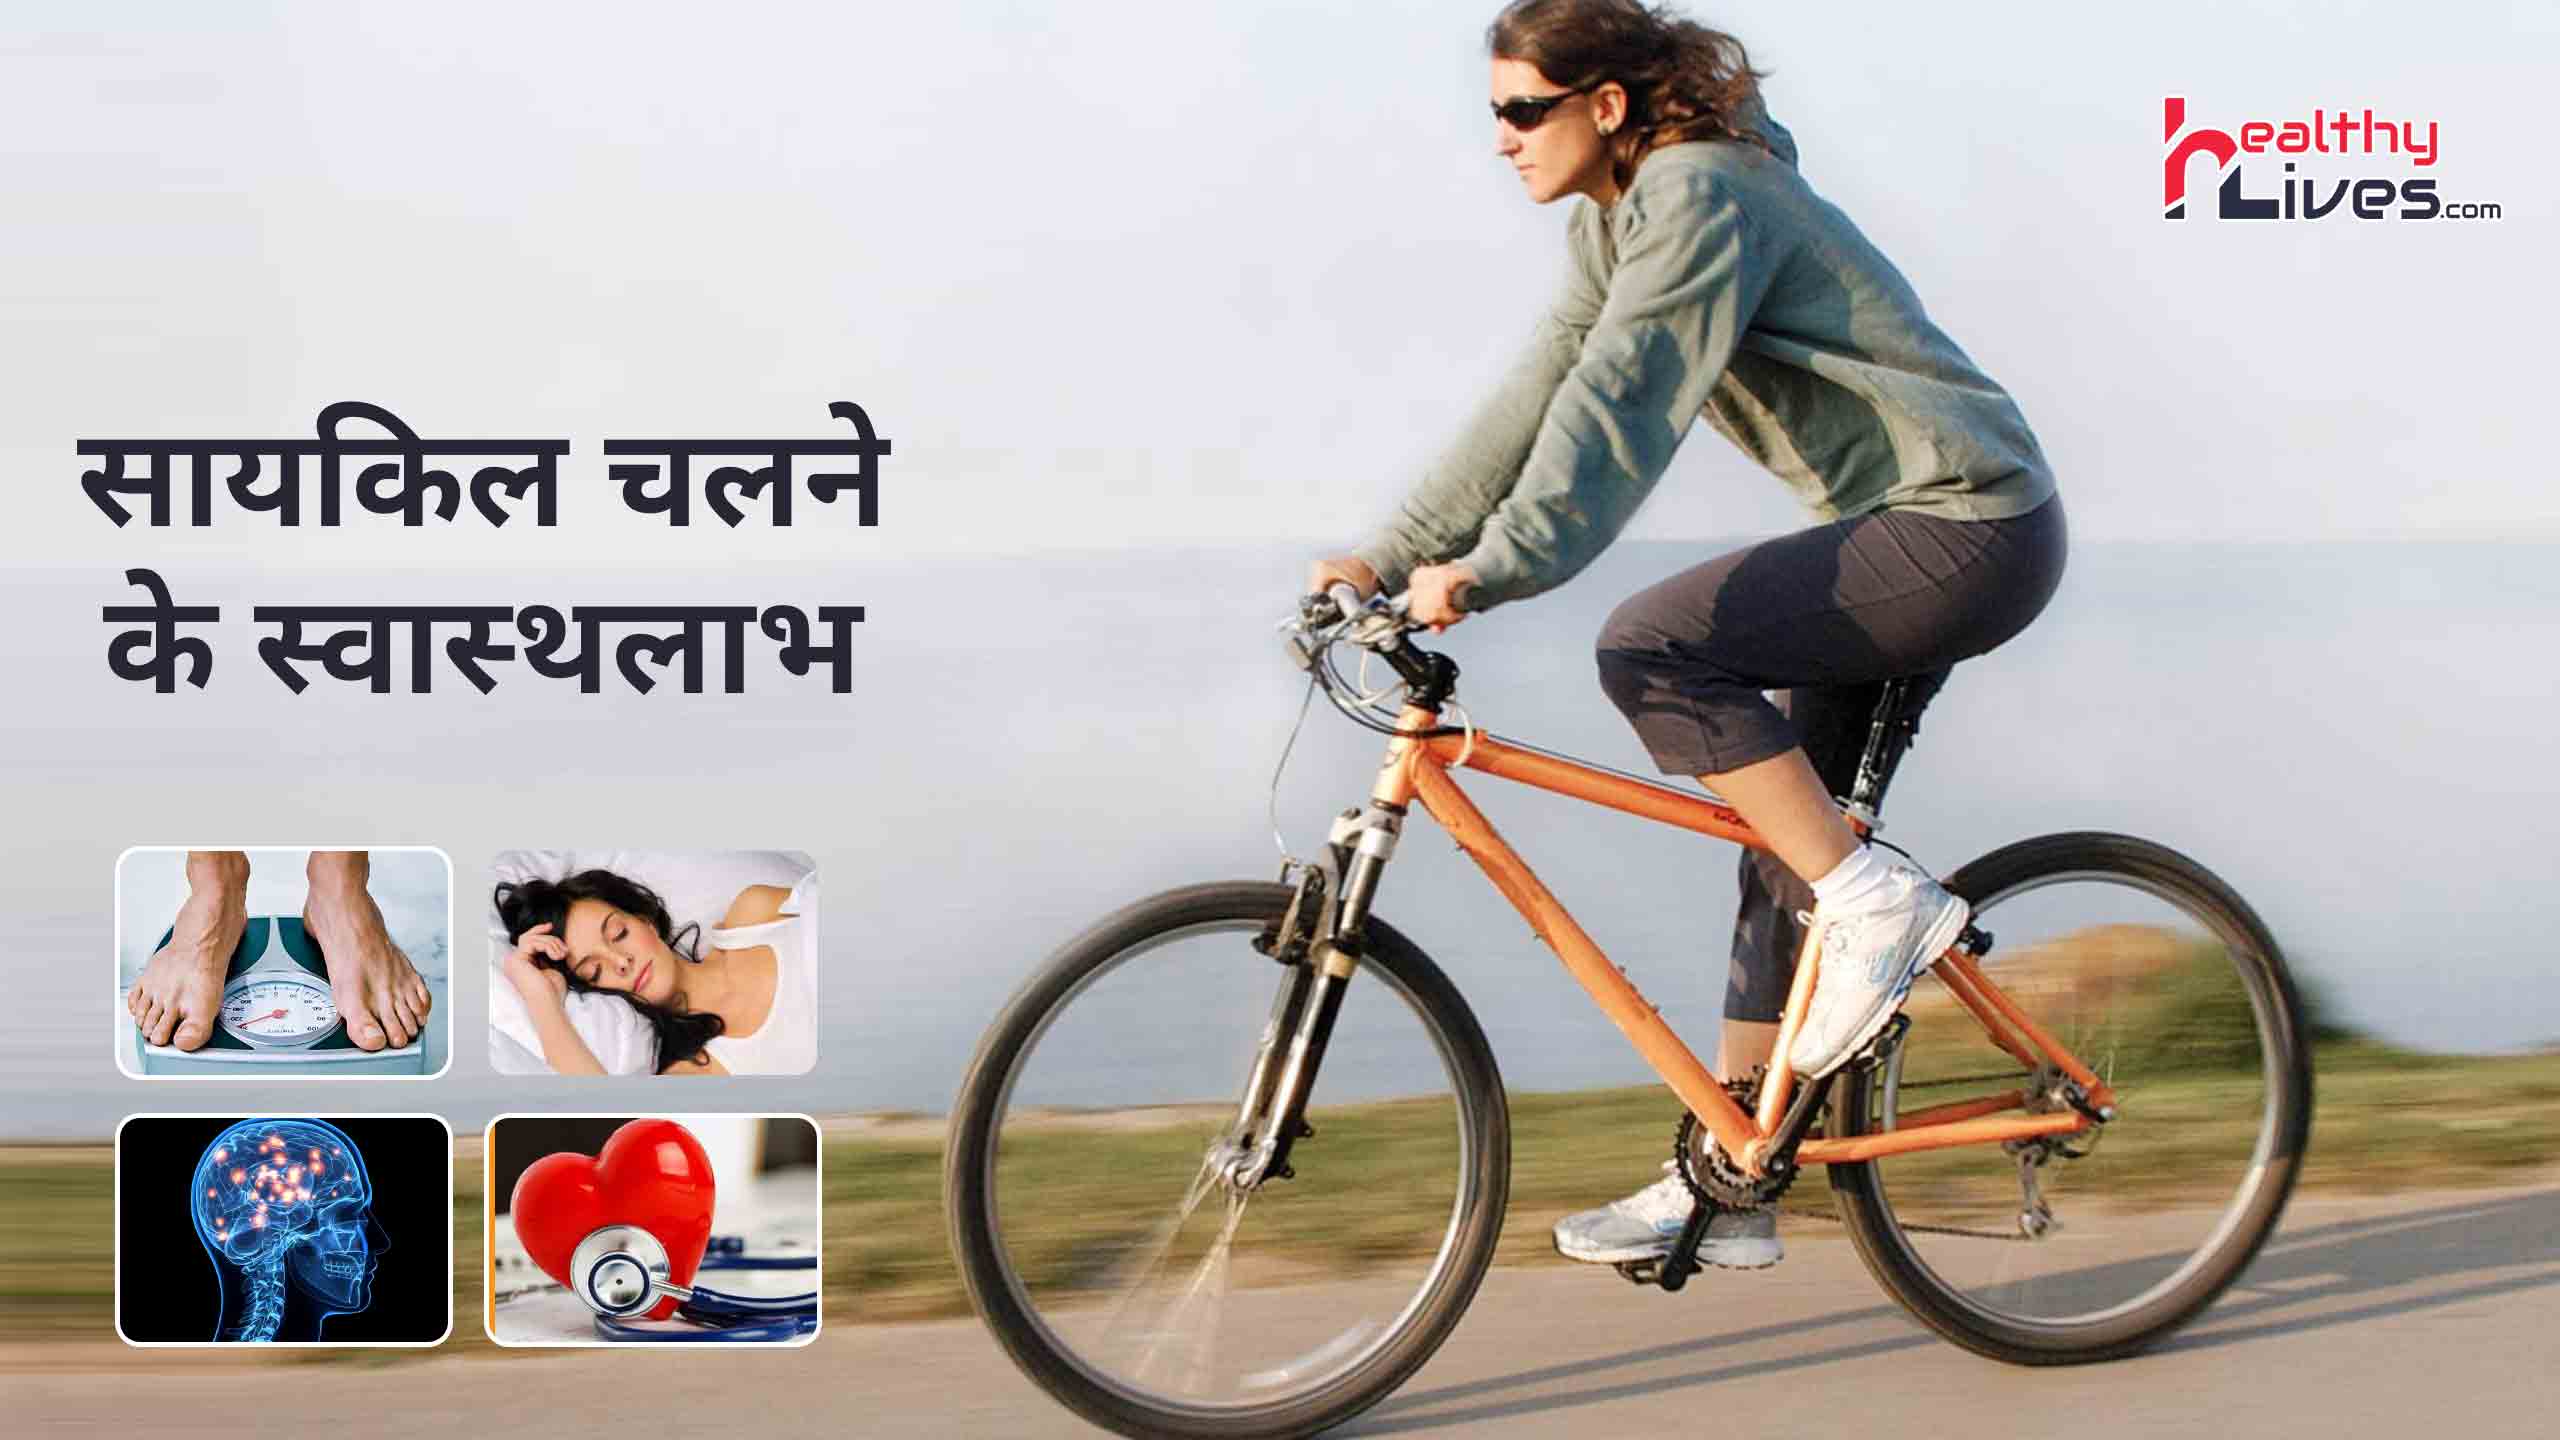 Benefits Of Cycling In Hindi: साइकिलिंग करने से होते है शरीर को बहुत फायदे